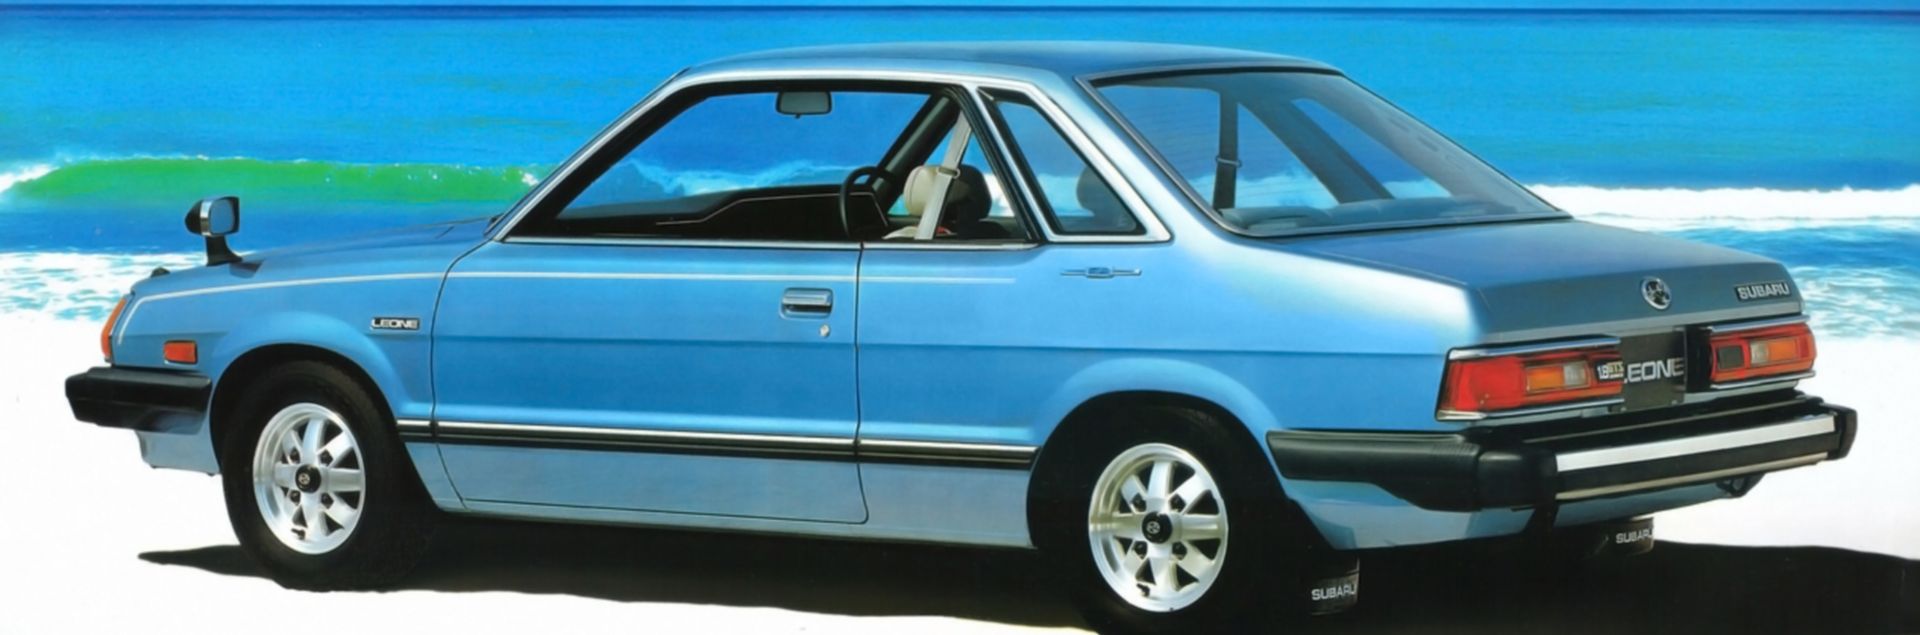 Der Subaru Leone